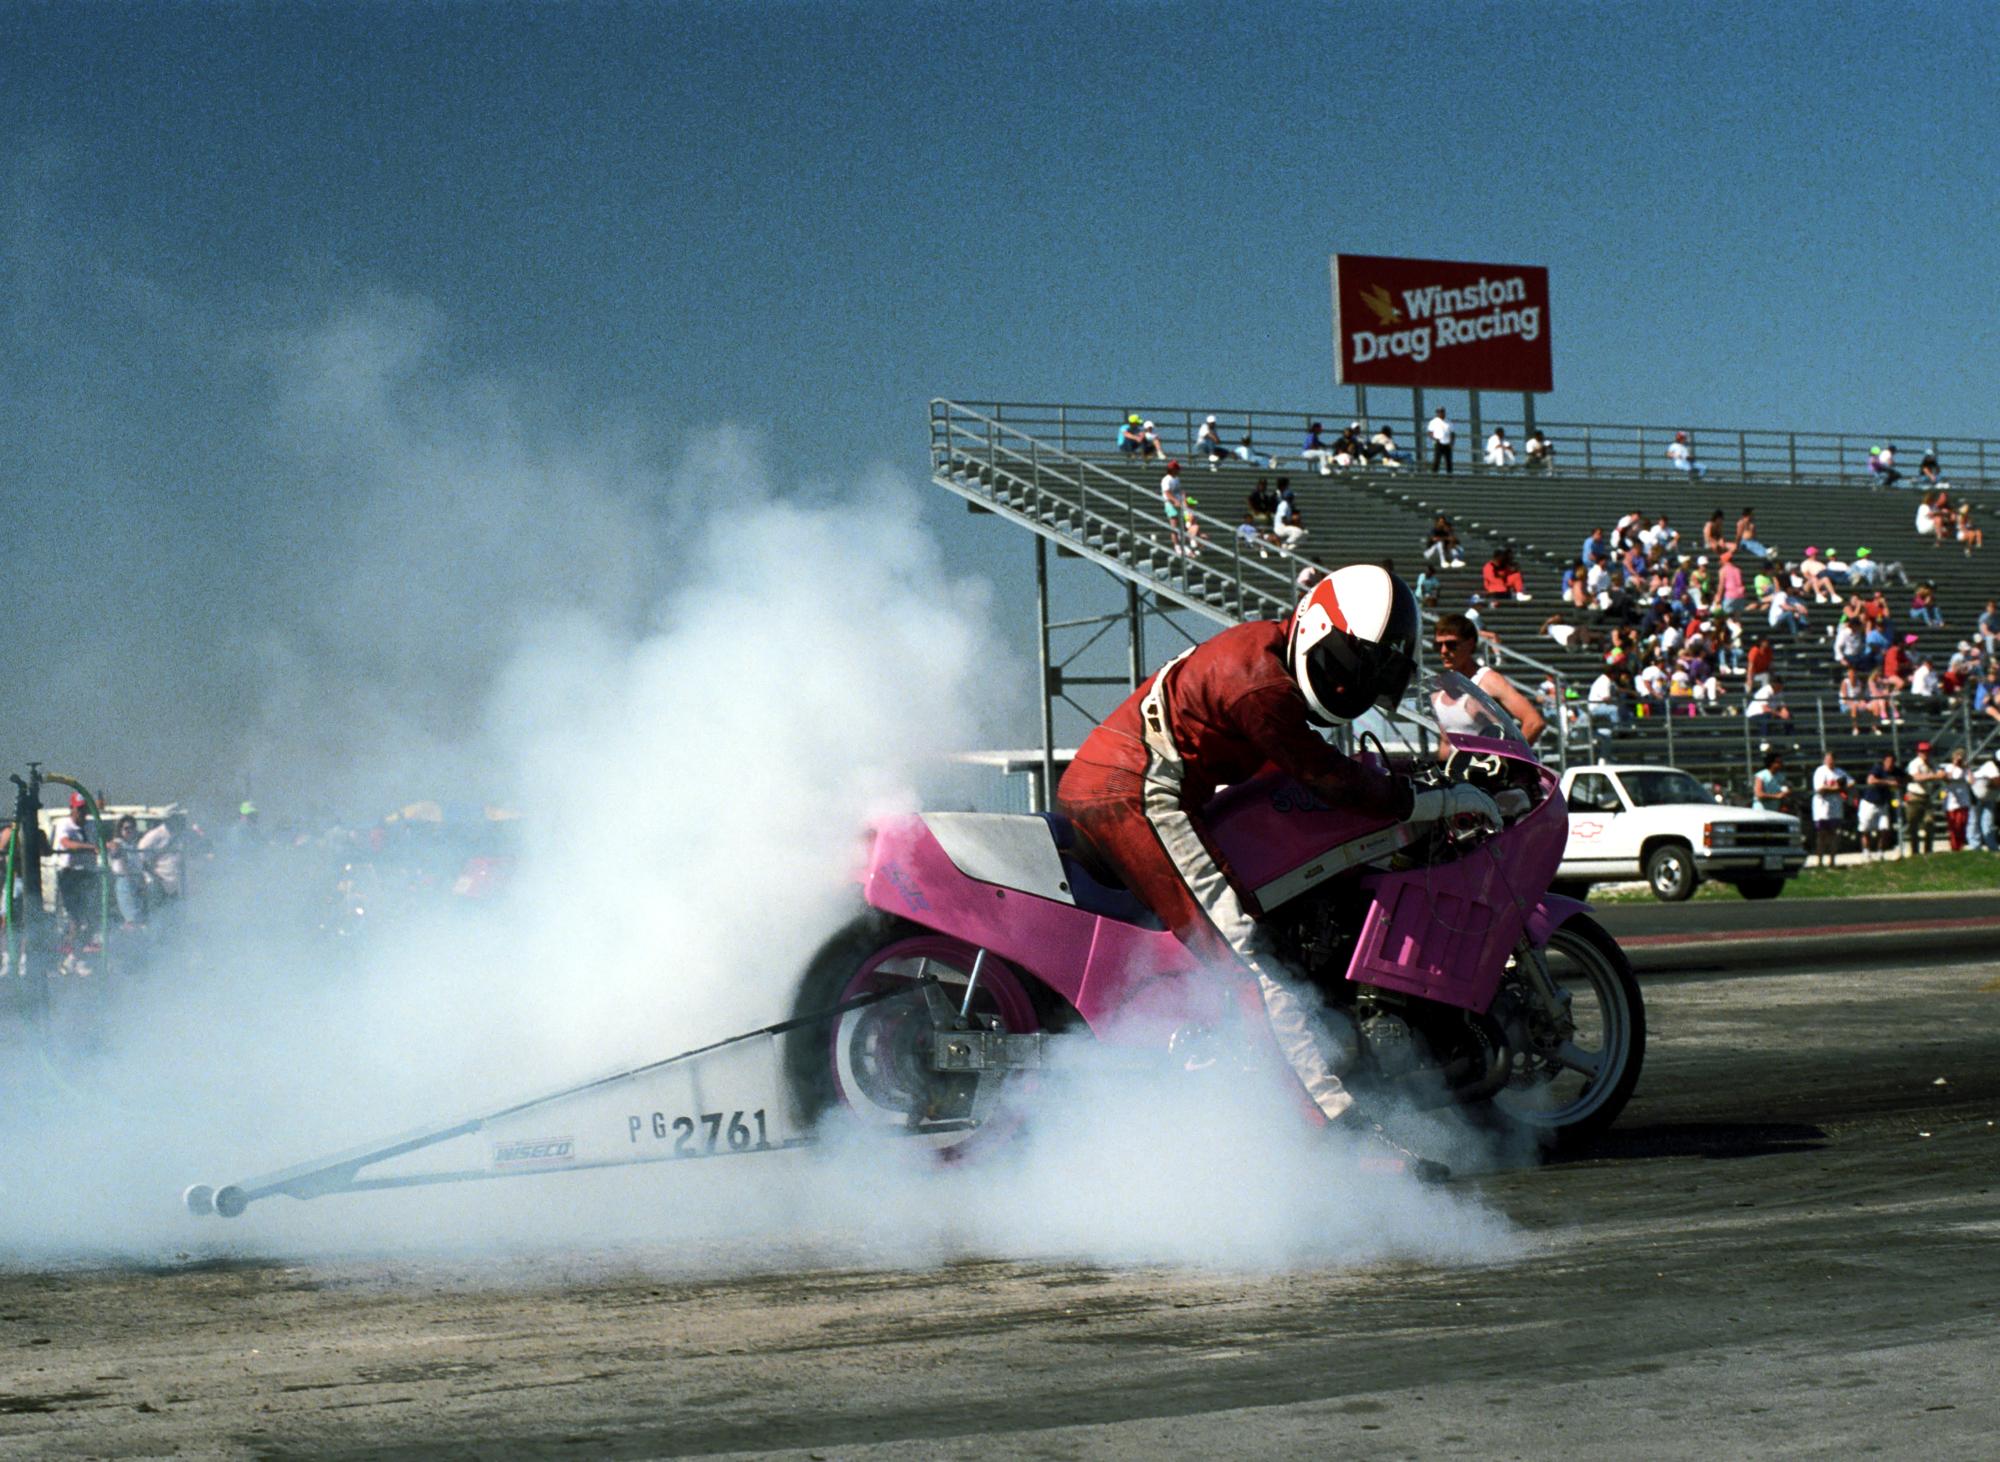 Texas Motor Drag Racing (1991) - Drag Racing Warm Up Start #4